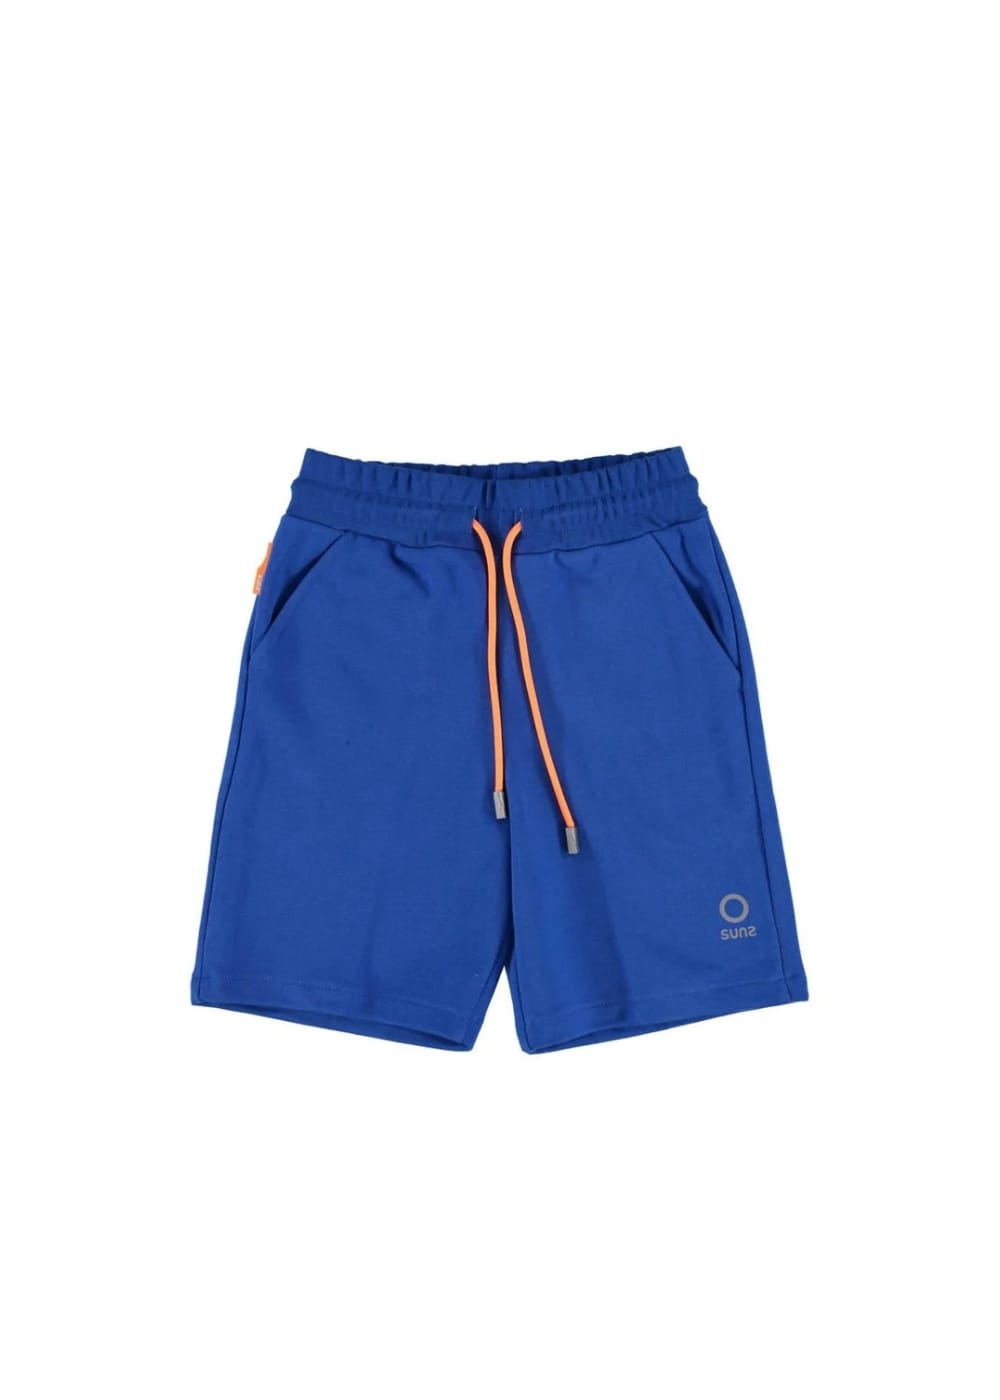 Featured image for “Suns Shorts Blu Laccio Fluo”